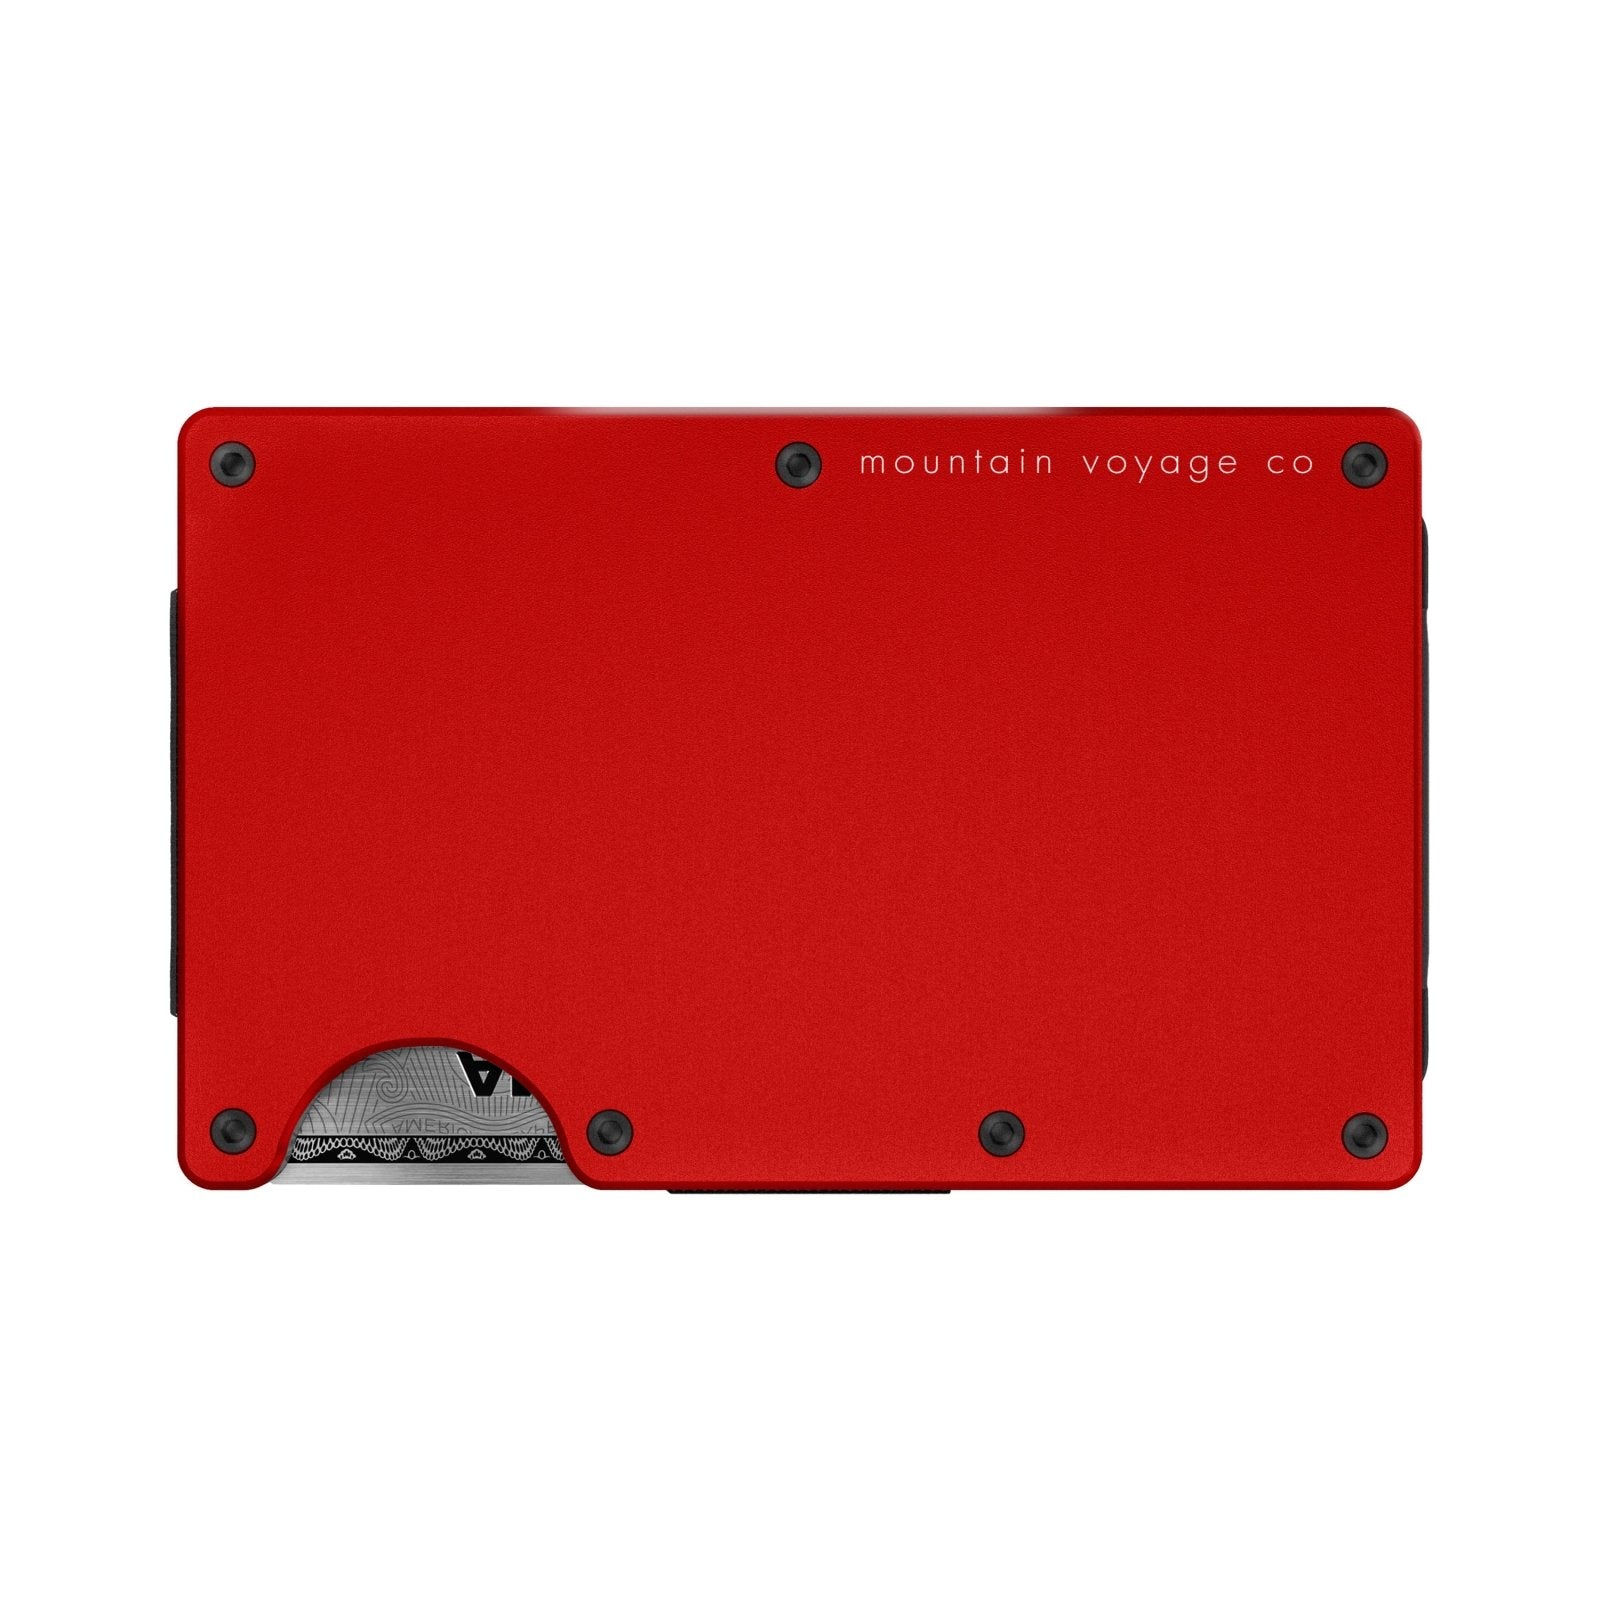 Red Slim Wallet, Imola Red Minimalist Wallet